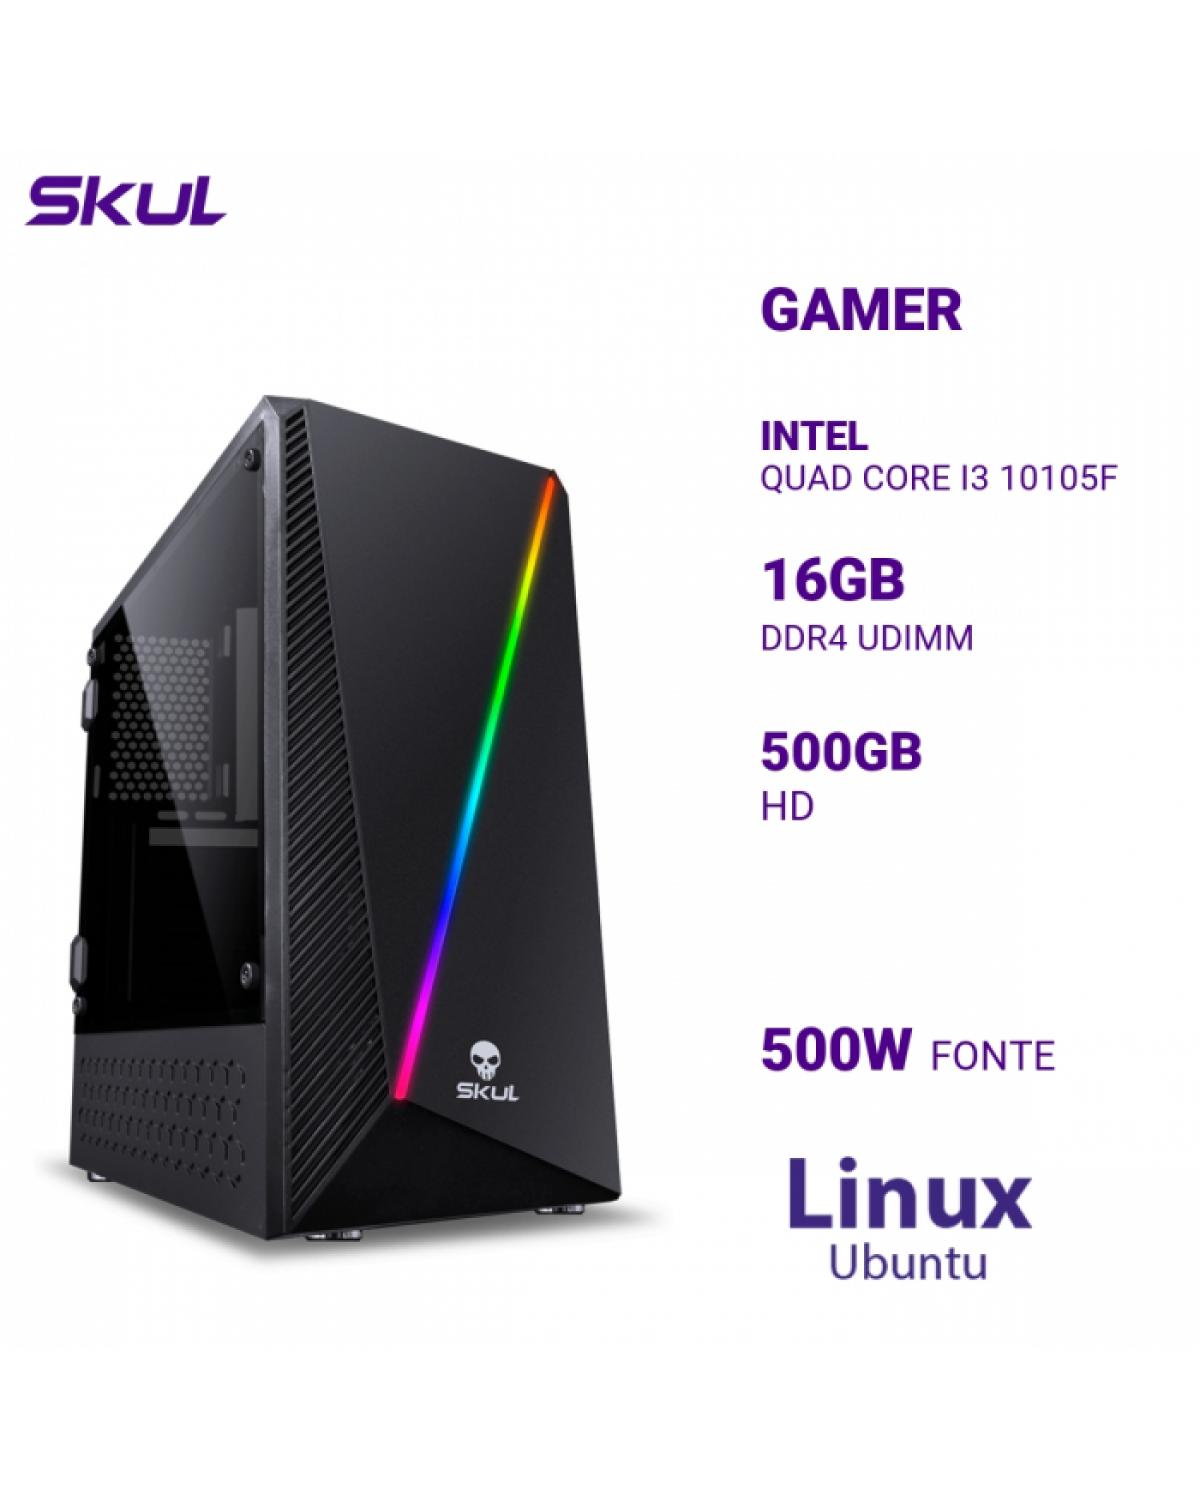 COMPUTADOR GAMER 3000 - QUAD CORE I3 10105F MEMÓRIA 16GB DDR4 HD 500GB RX 550 4GB FONTE 500W PFC ATIVO LINUX UBUNTU